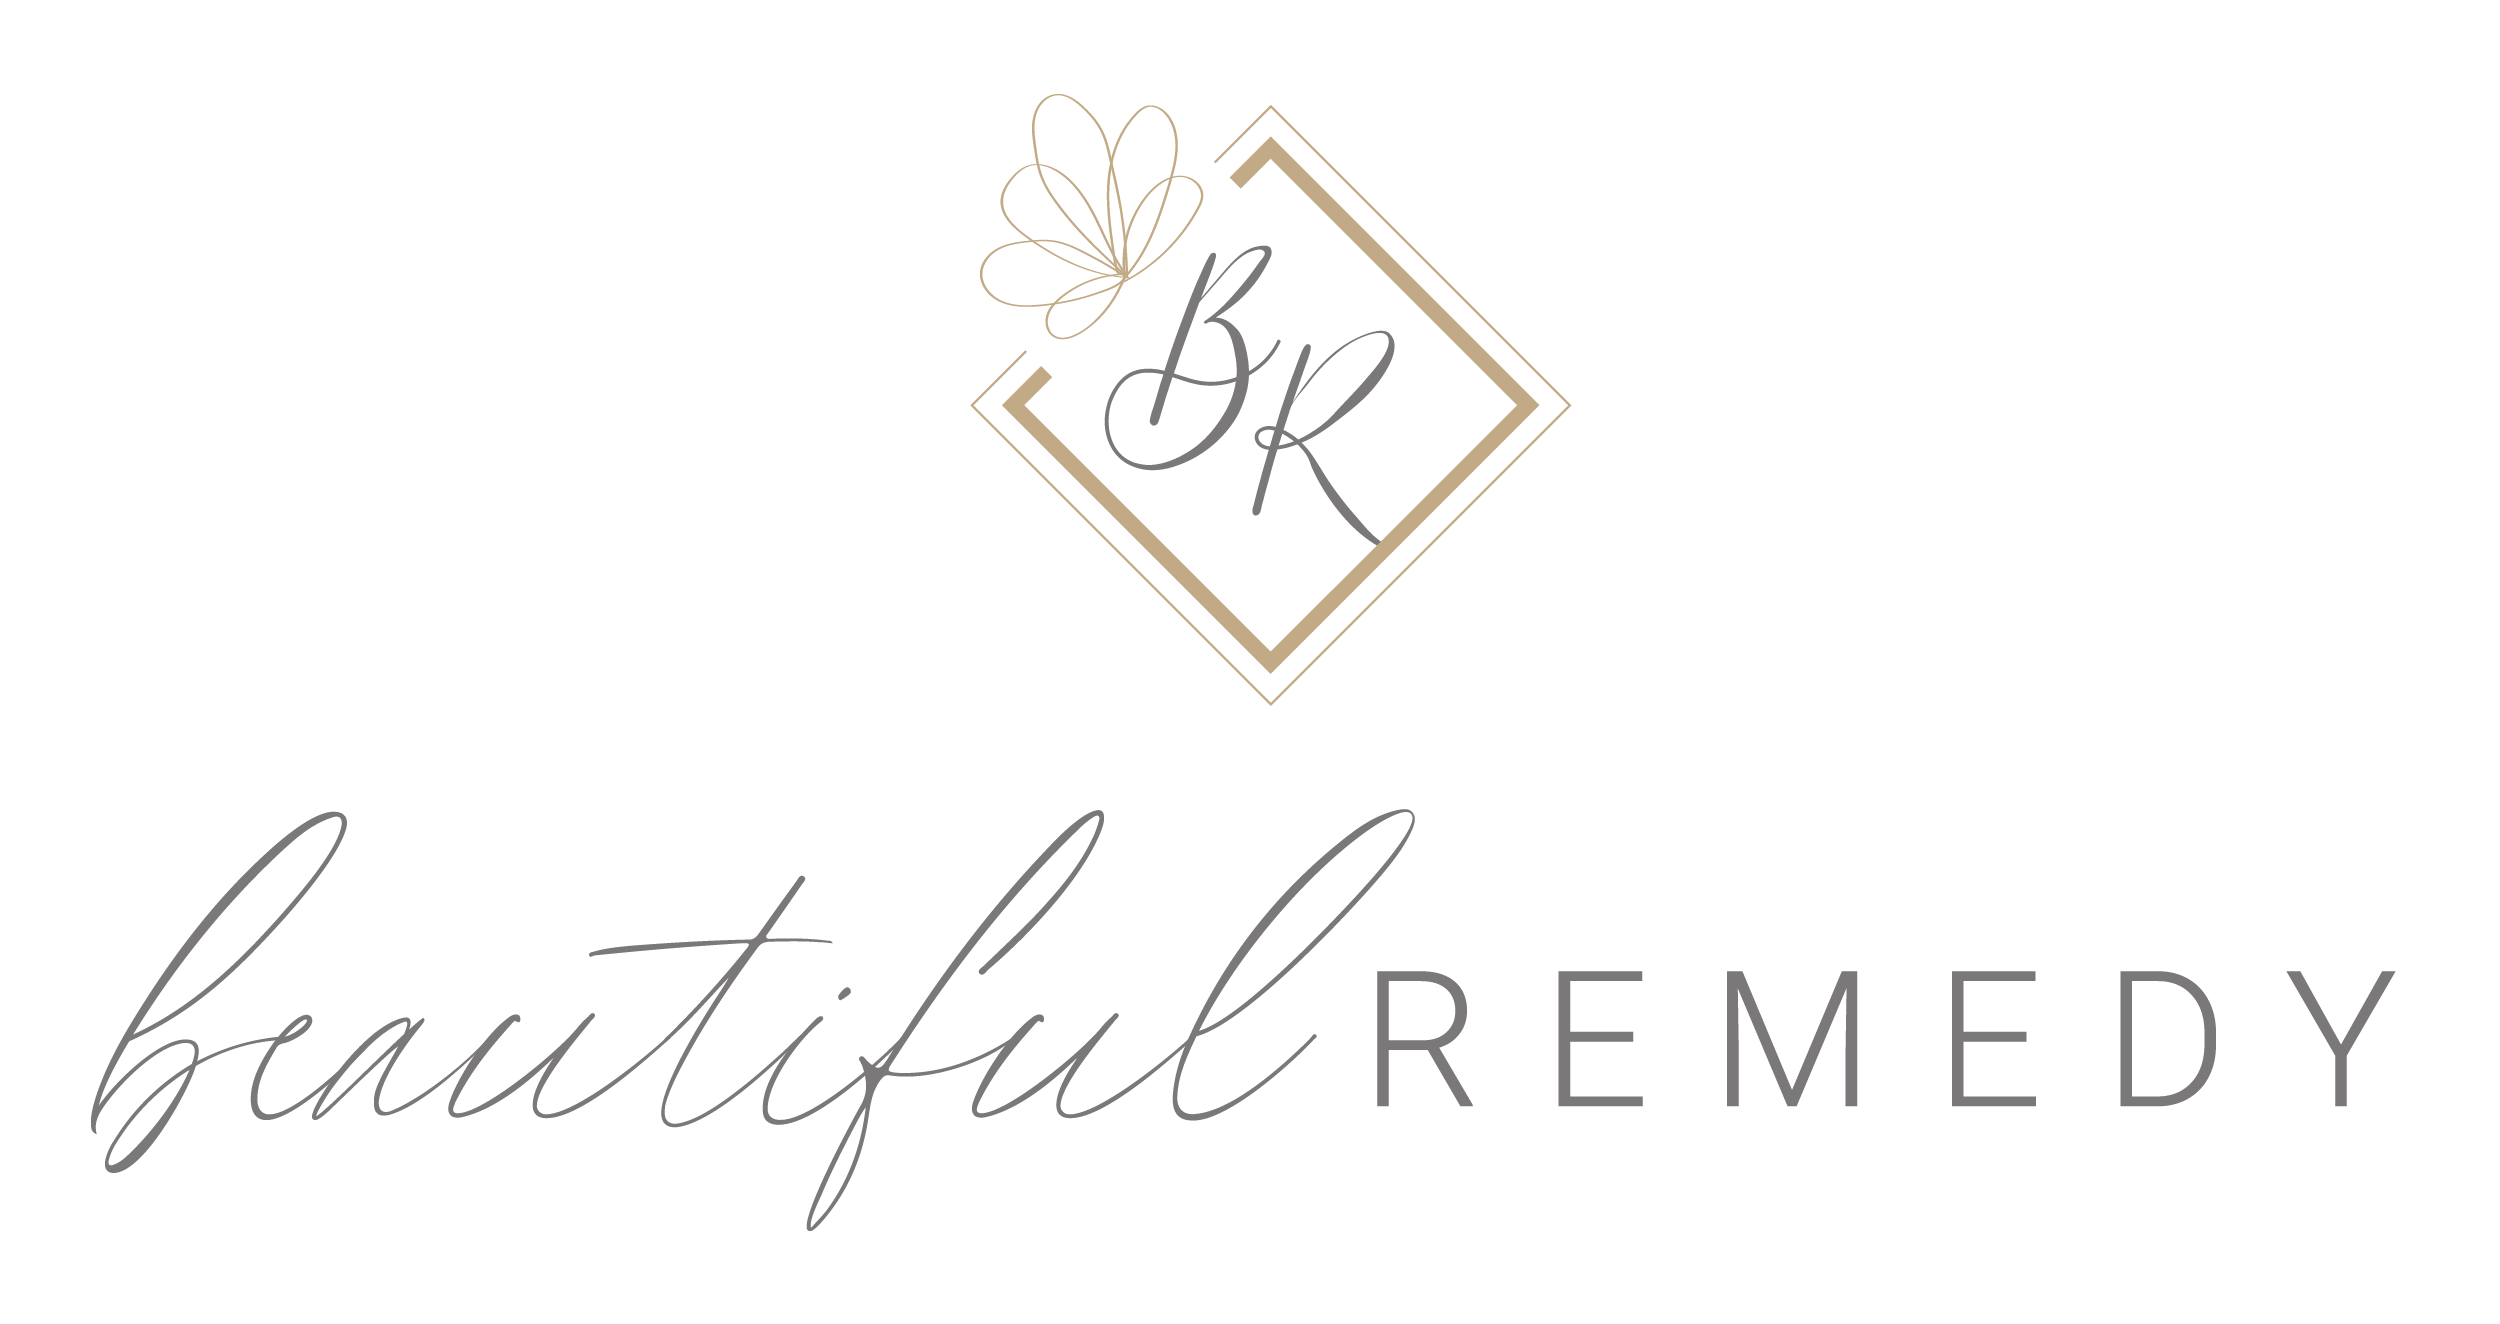 Beautiful Remedy LLC